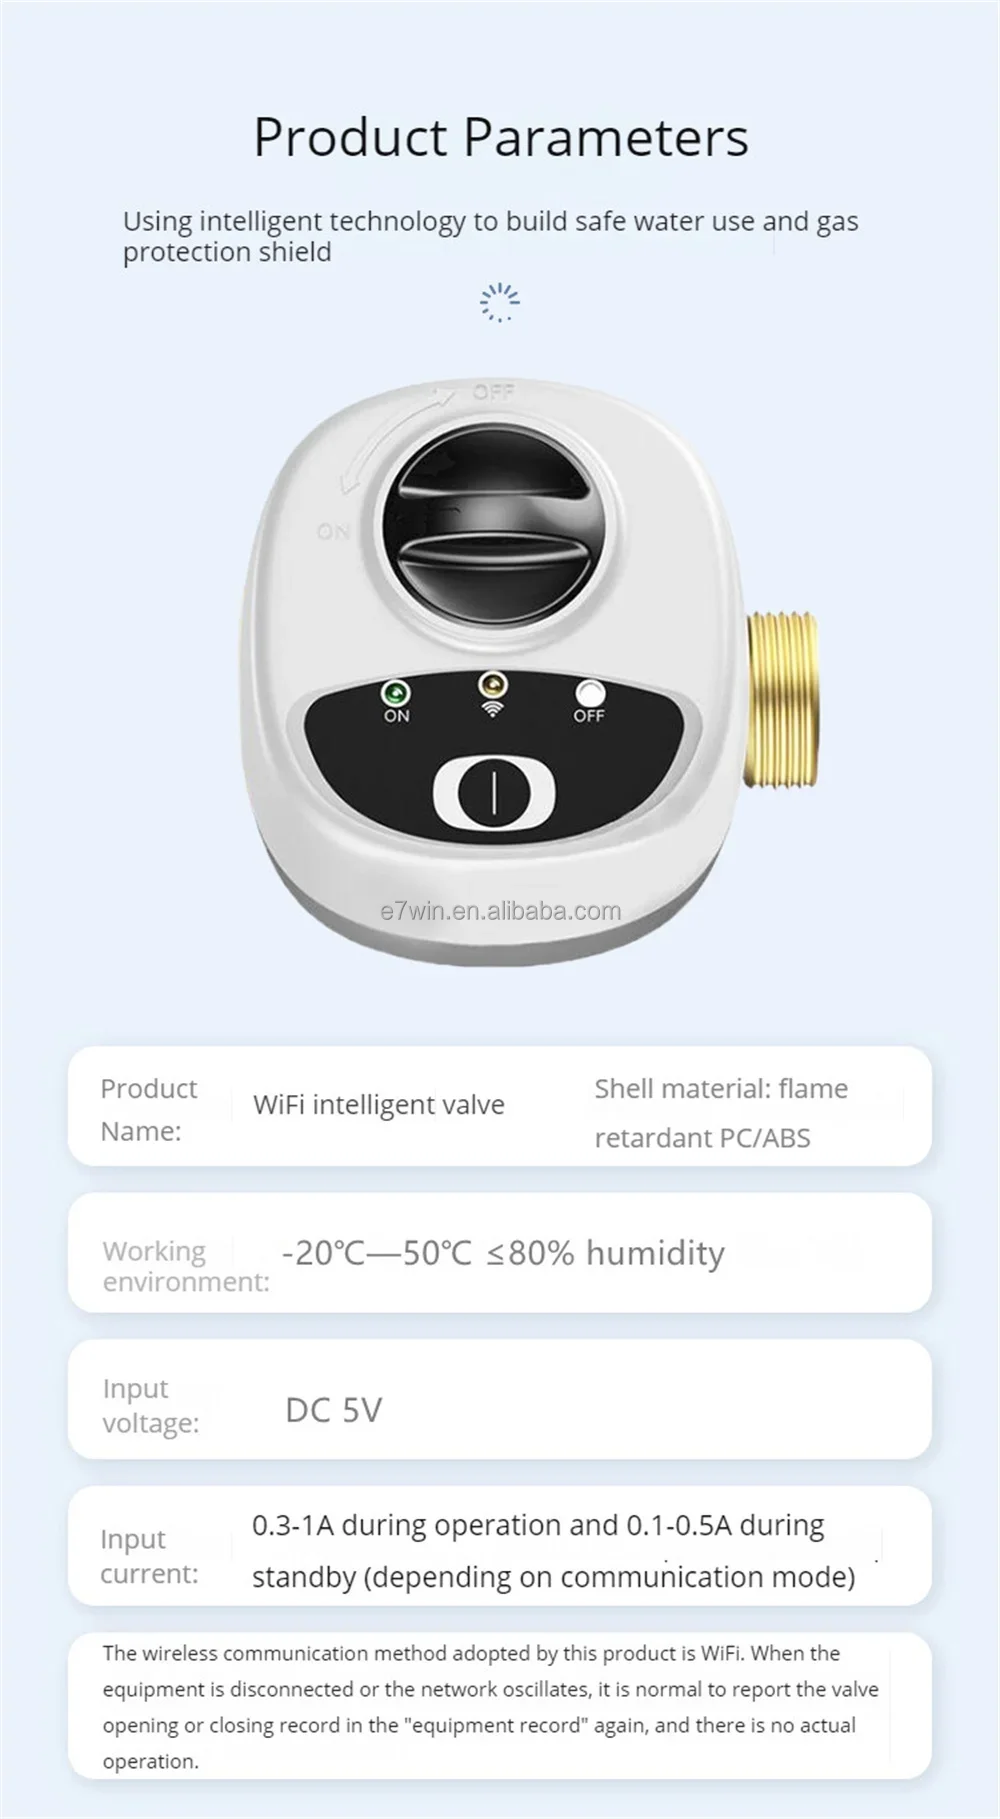 eWelink Smart WiFi Water Valve Gas Shutoff For DN15/DN20/DN25 APP Wireless Control Timer Alarm automation linkage Valve Alexa